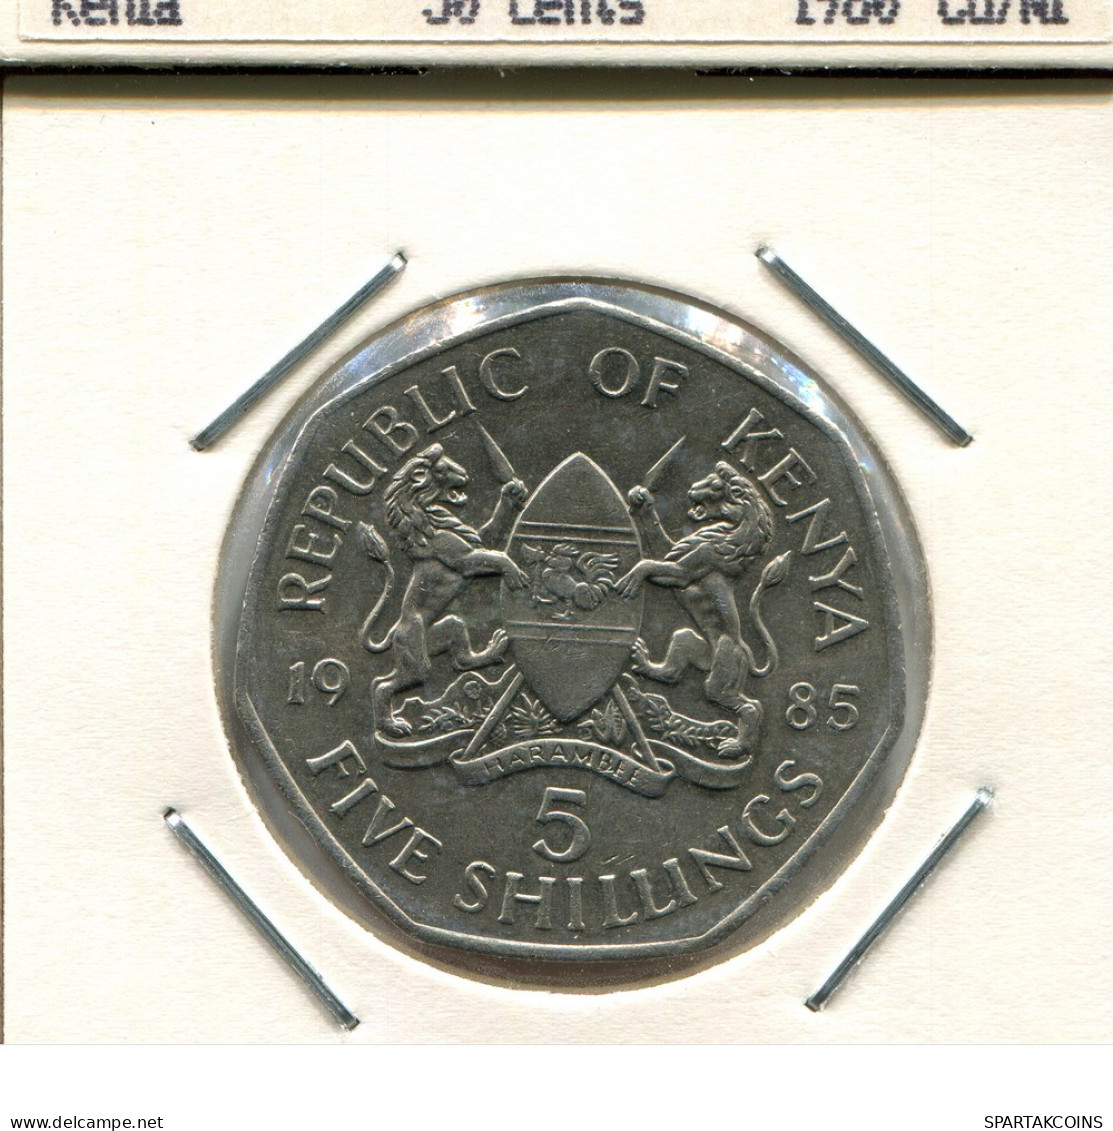 5 SHILLING 1985 KENYA Coin #AS332.U - Kenya